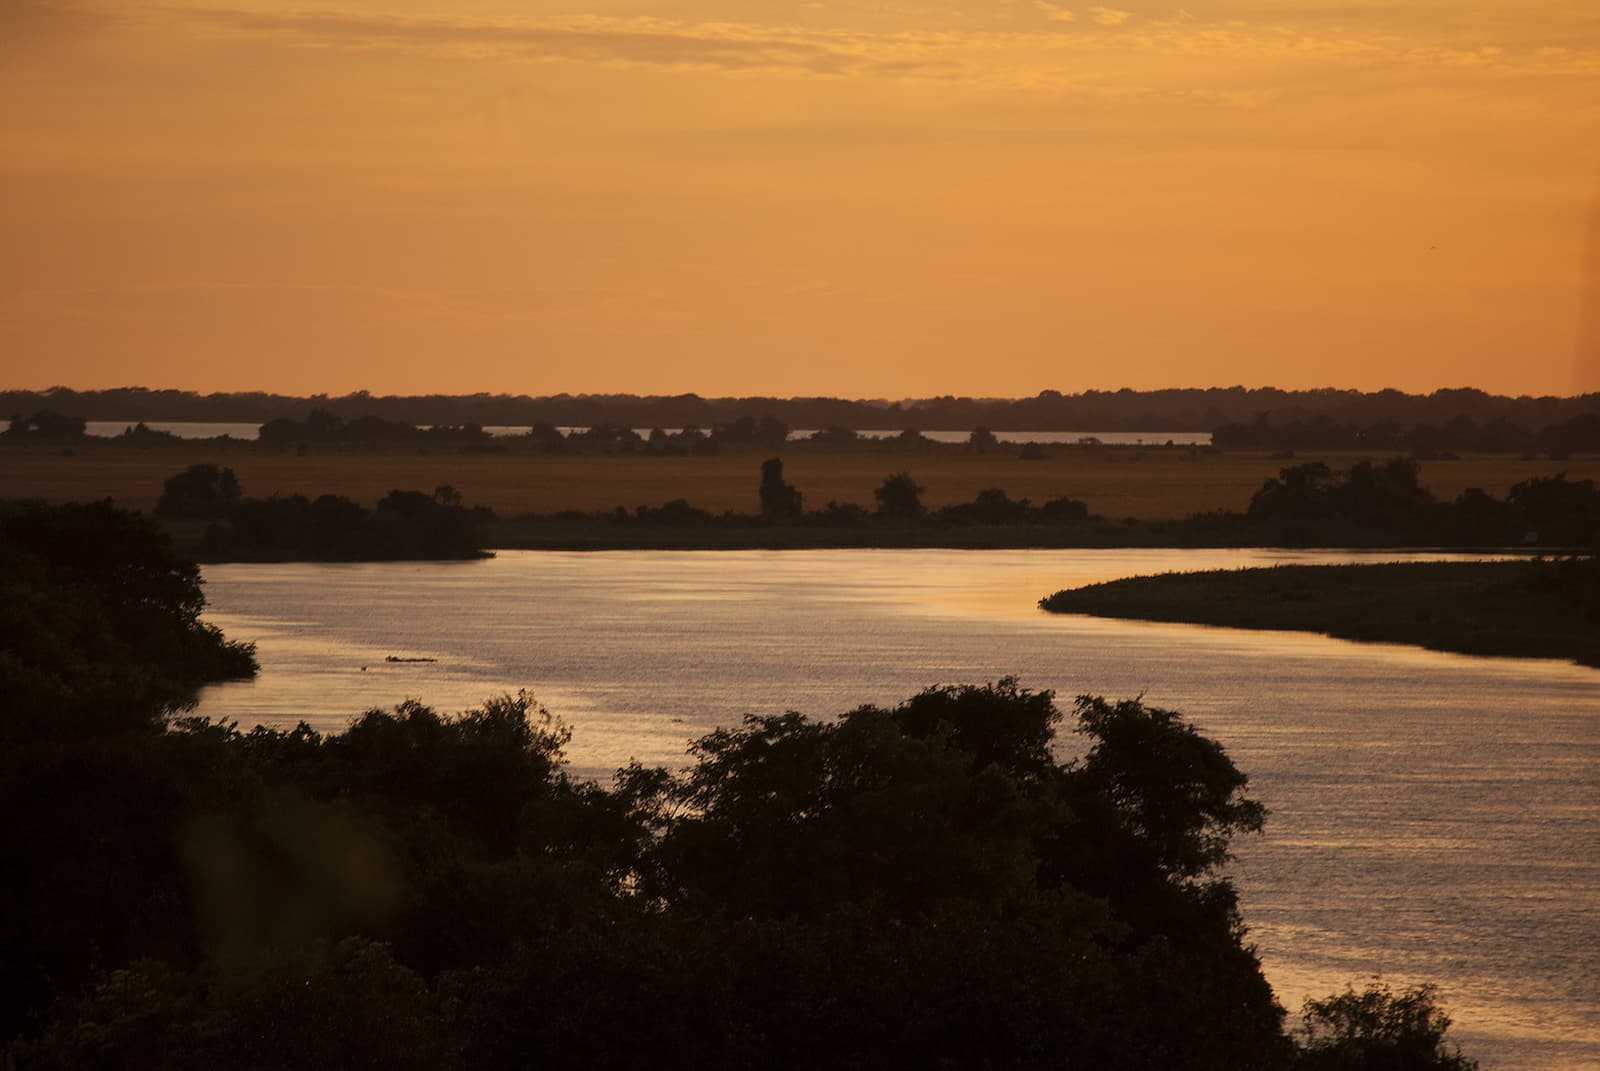 Parque Nacional do Pantanal Matogrossense